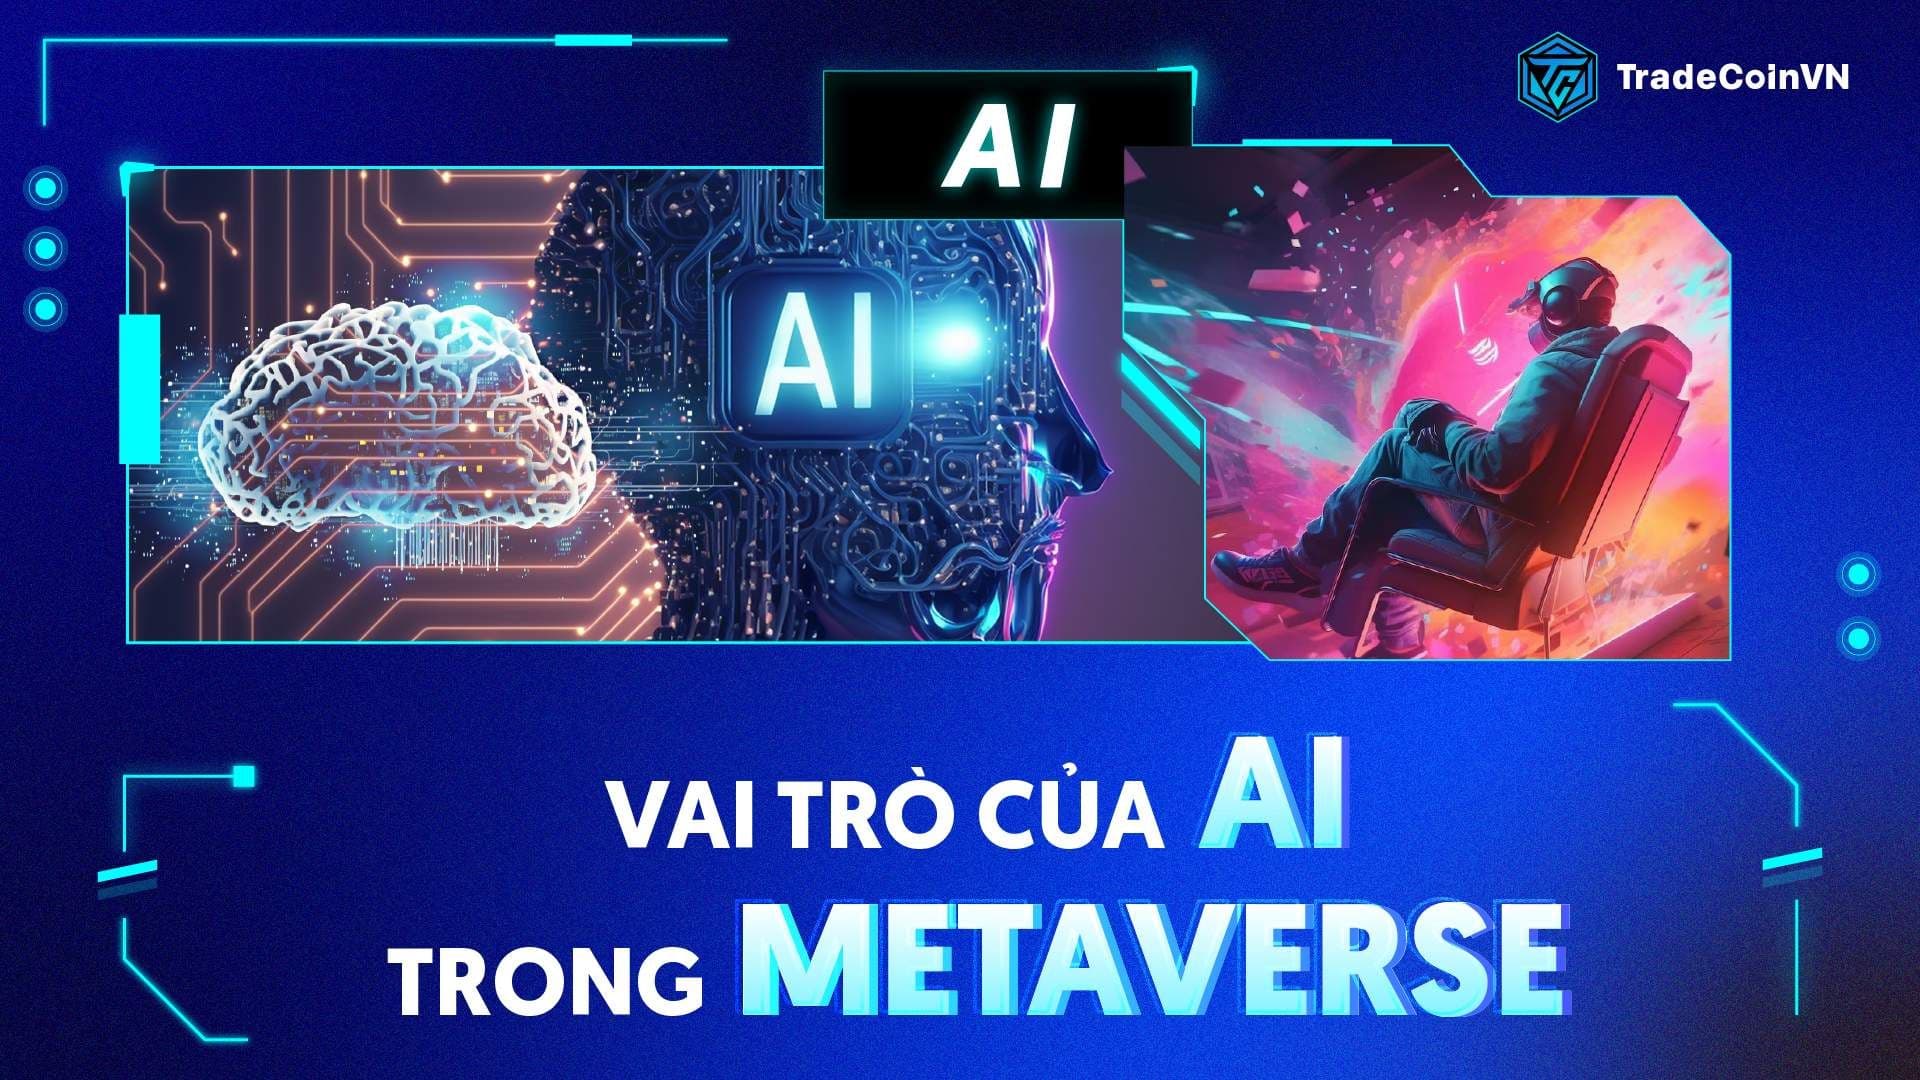 Vai trò của AI trong Metaverse